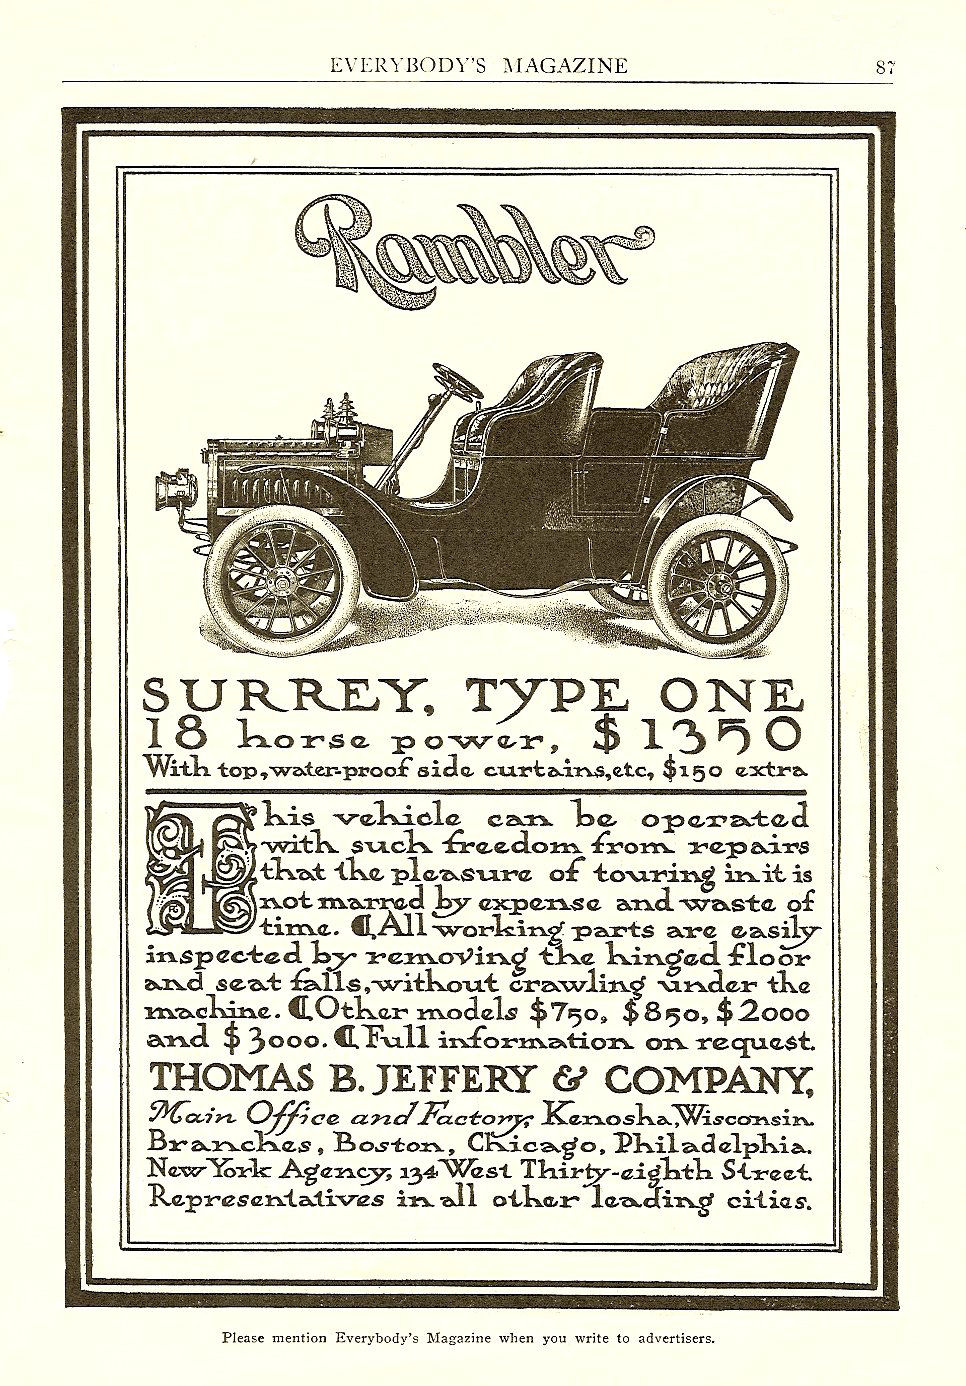 1905 Rambler Auto Advertising